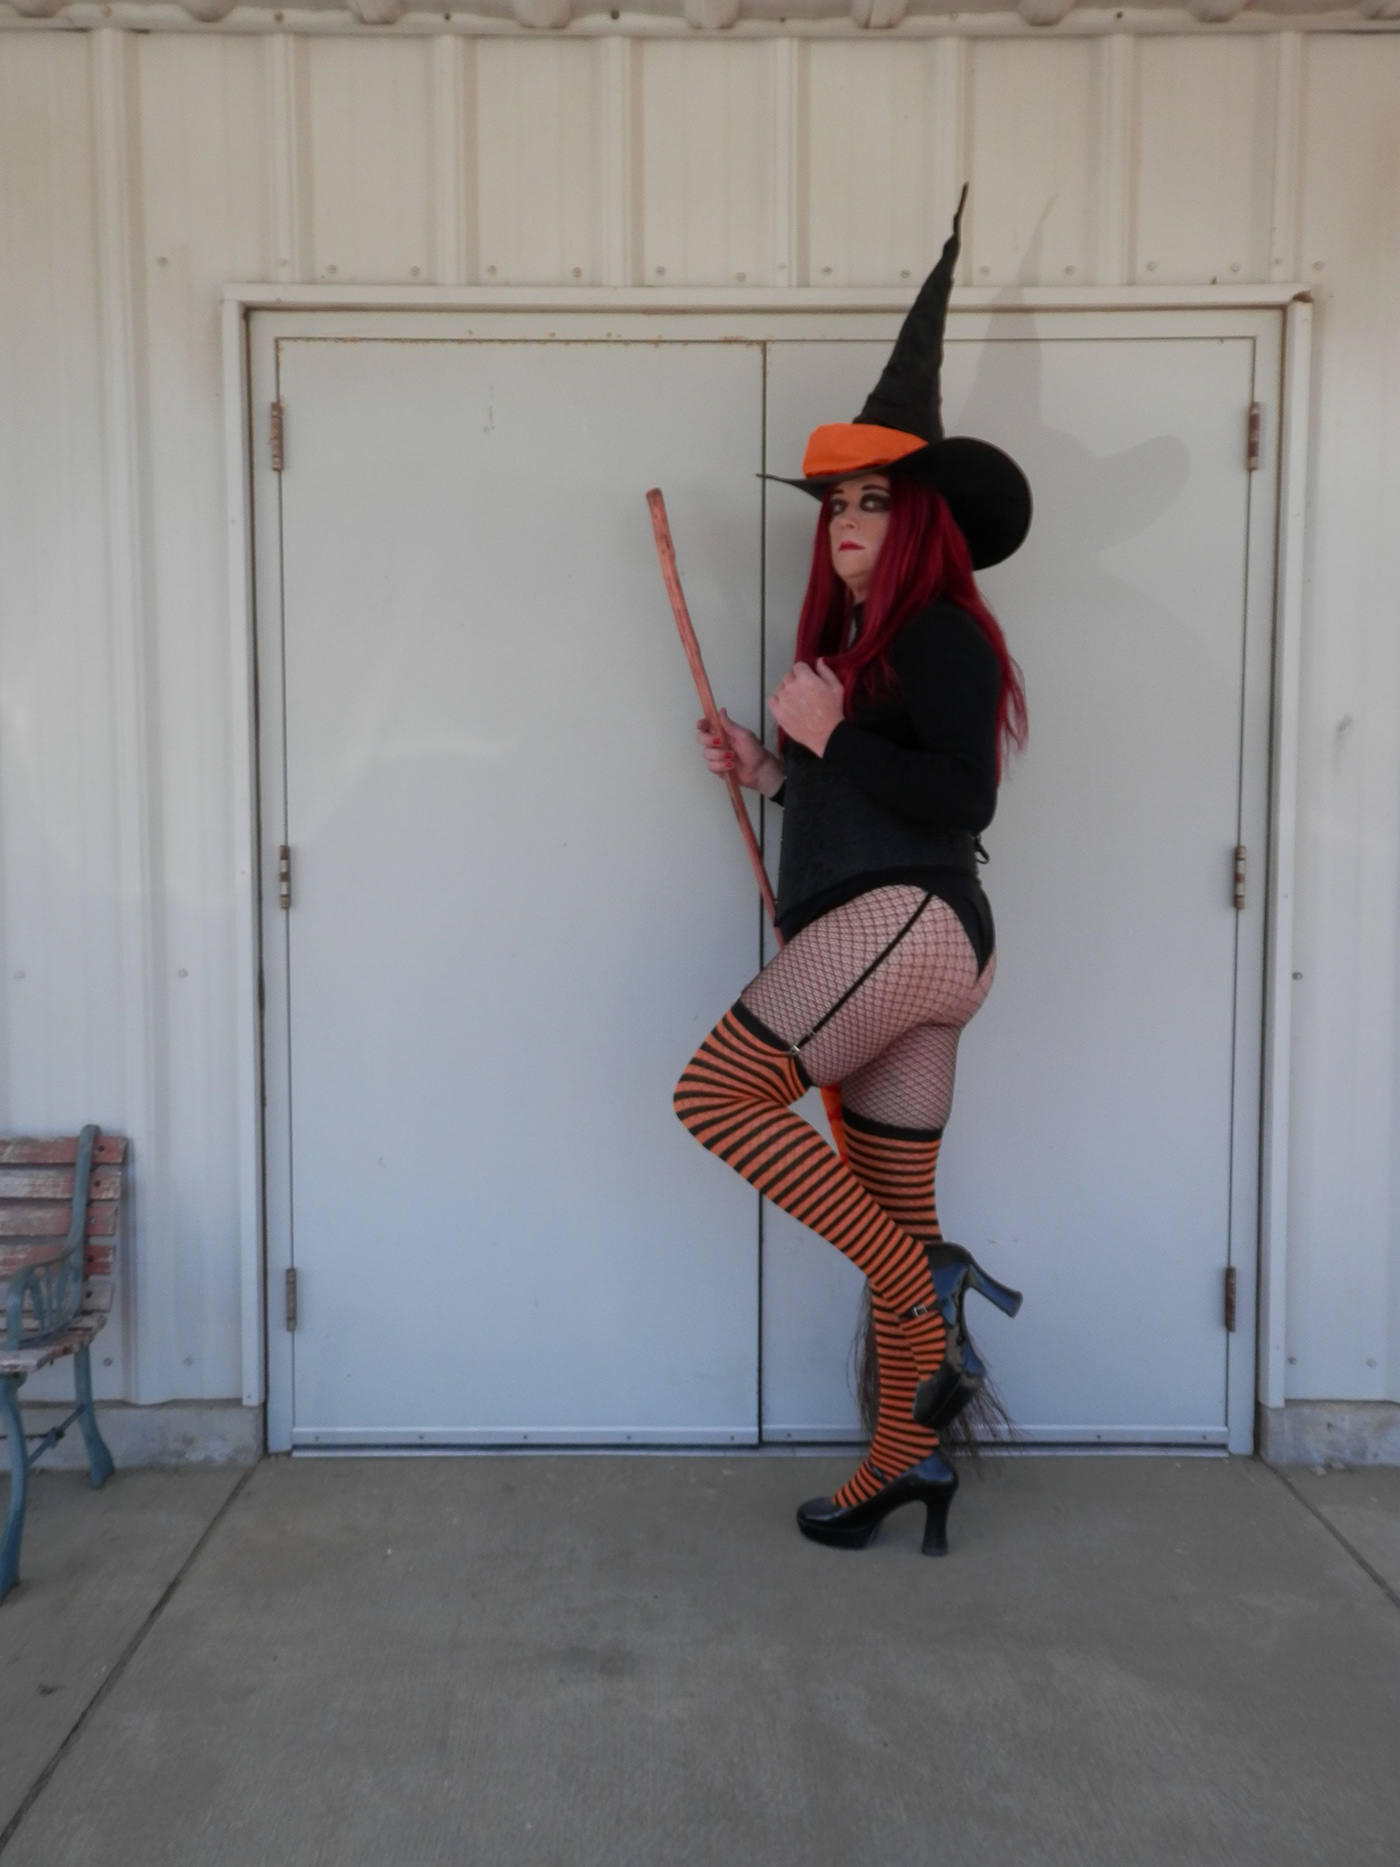 Halloween fishnets redhead model photoshoot Halloween2022 hay bales Jackolantern witch witchhat